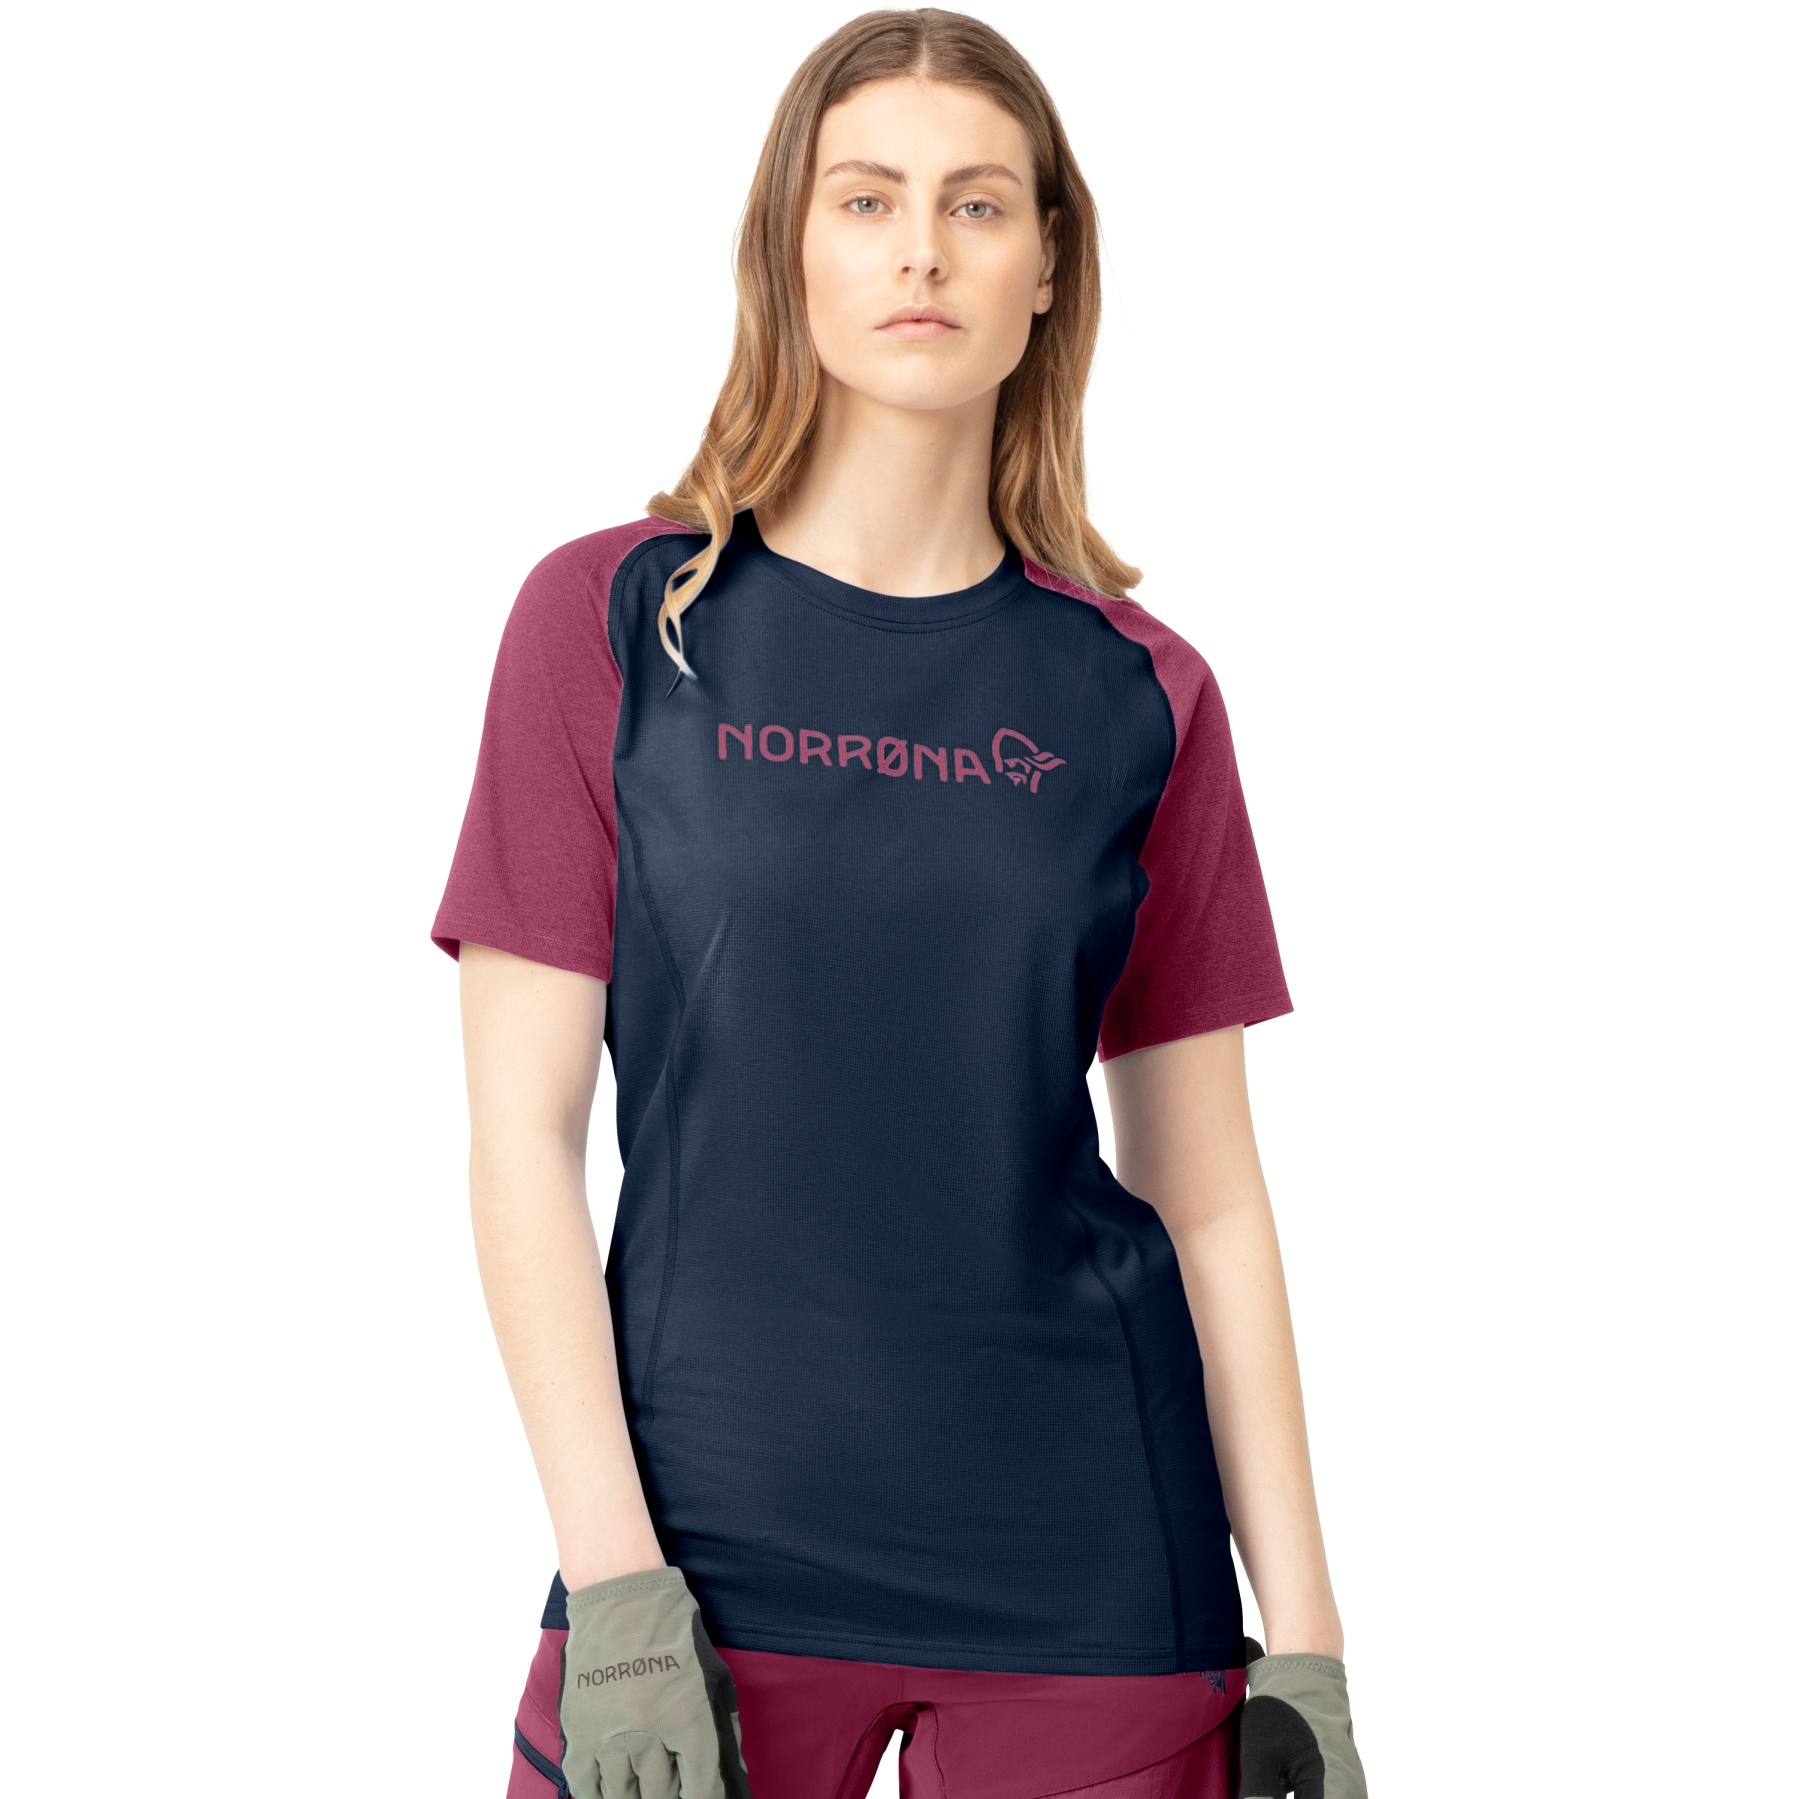 Produktbild von Norrona fjørå equaliser lightweight T-Shirt Damen - Violet Quartz/Indigo Night